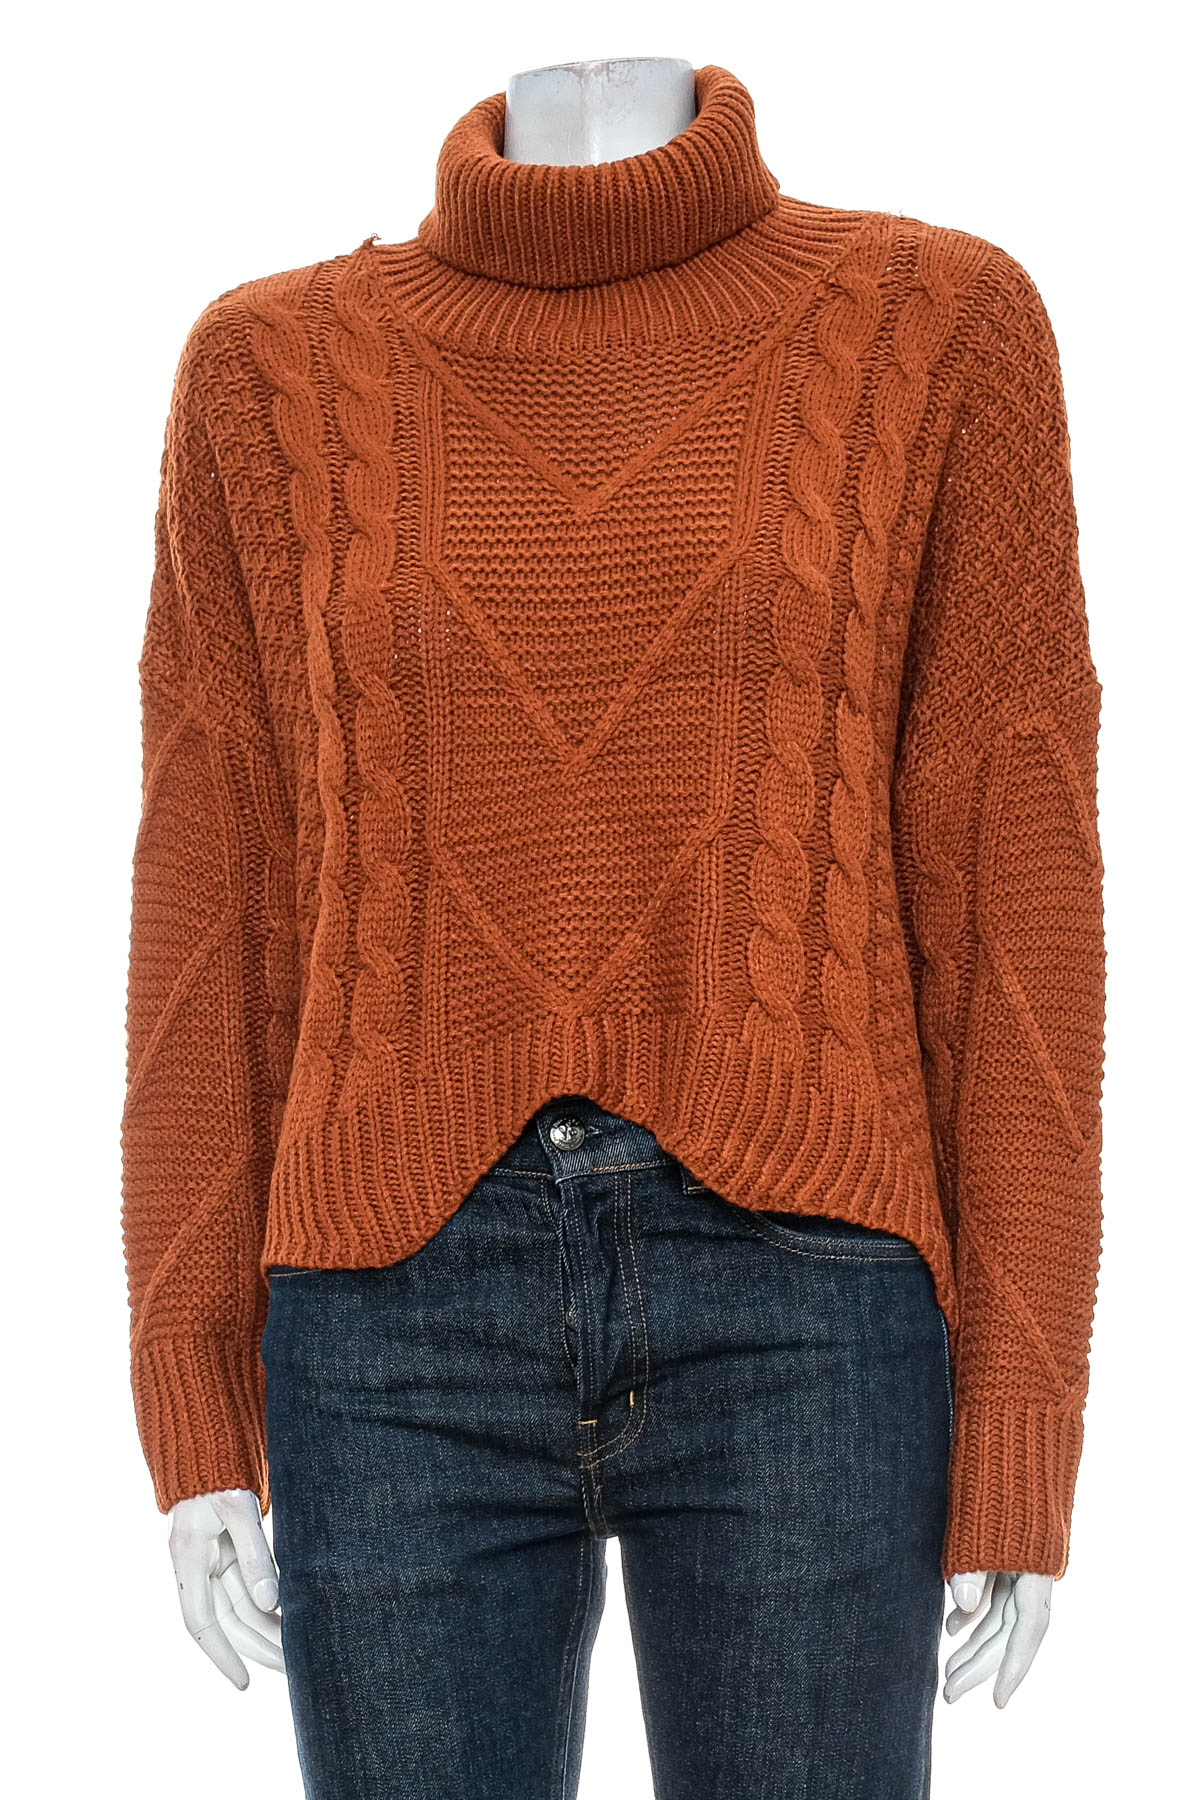 Women's sweater - Beyove - 0